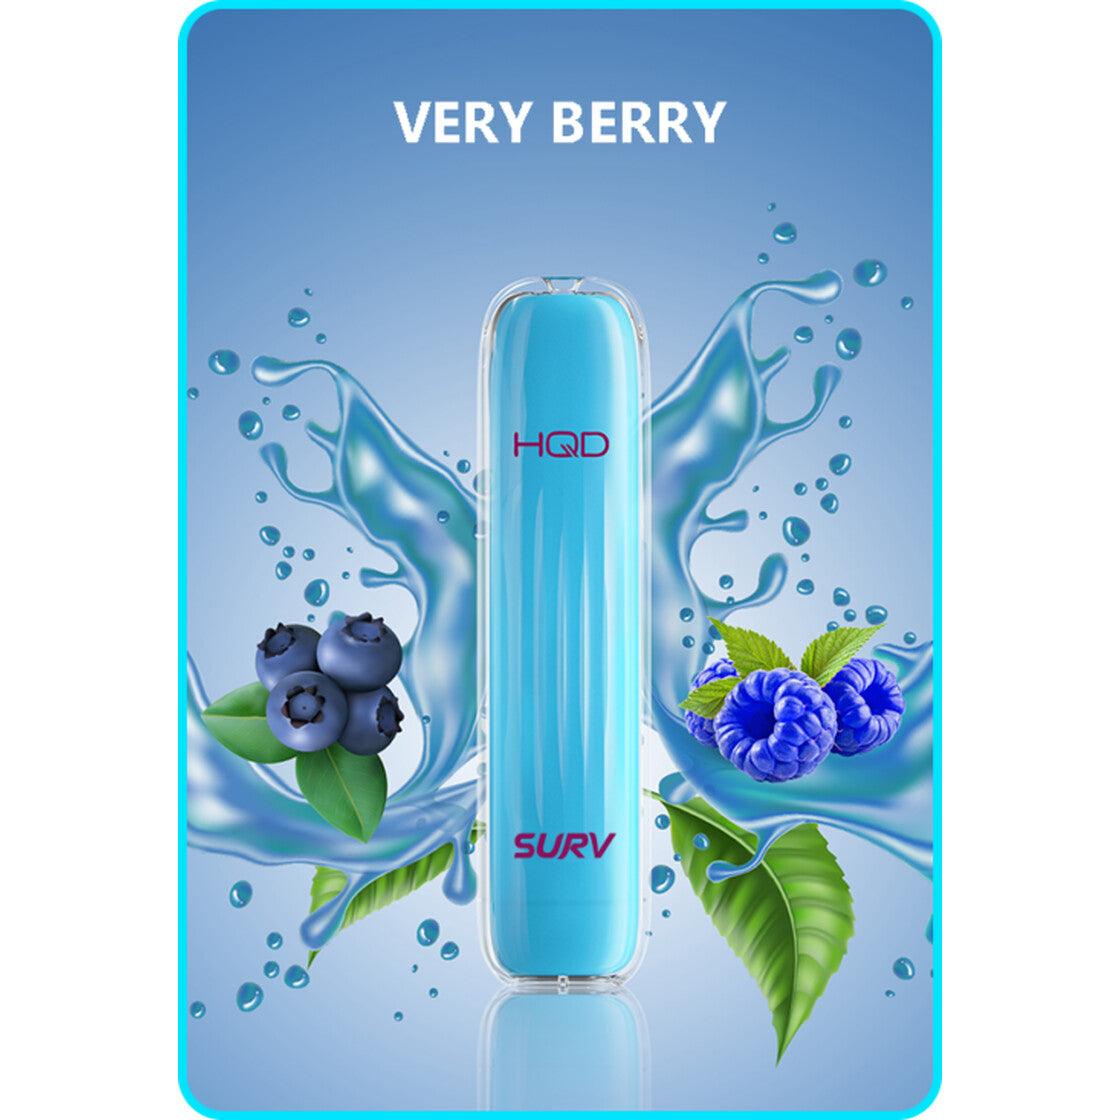 HQD Surv Vape - 600 Jumble Berry (Very Berry) - Dschinni GmbH